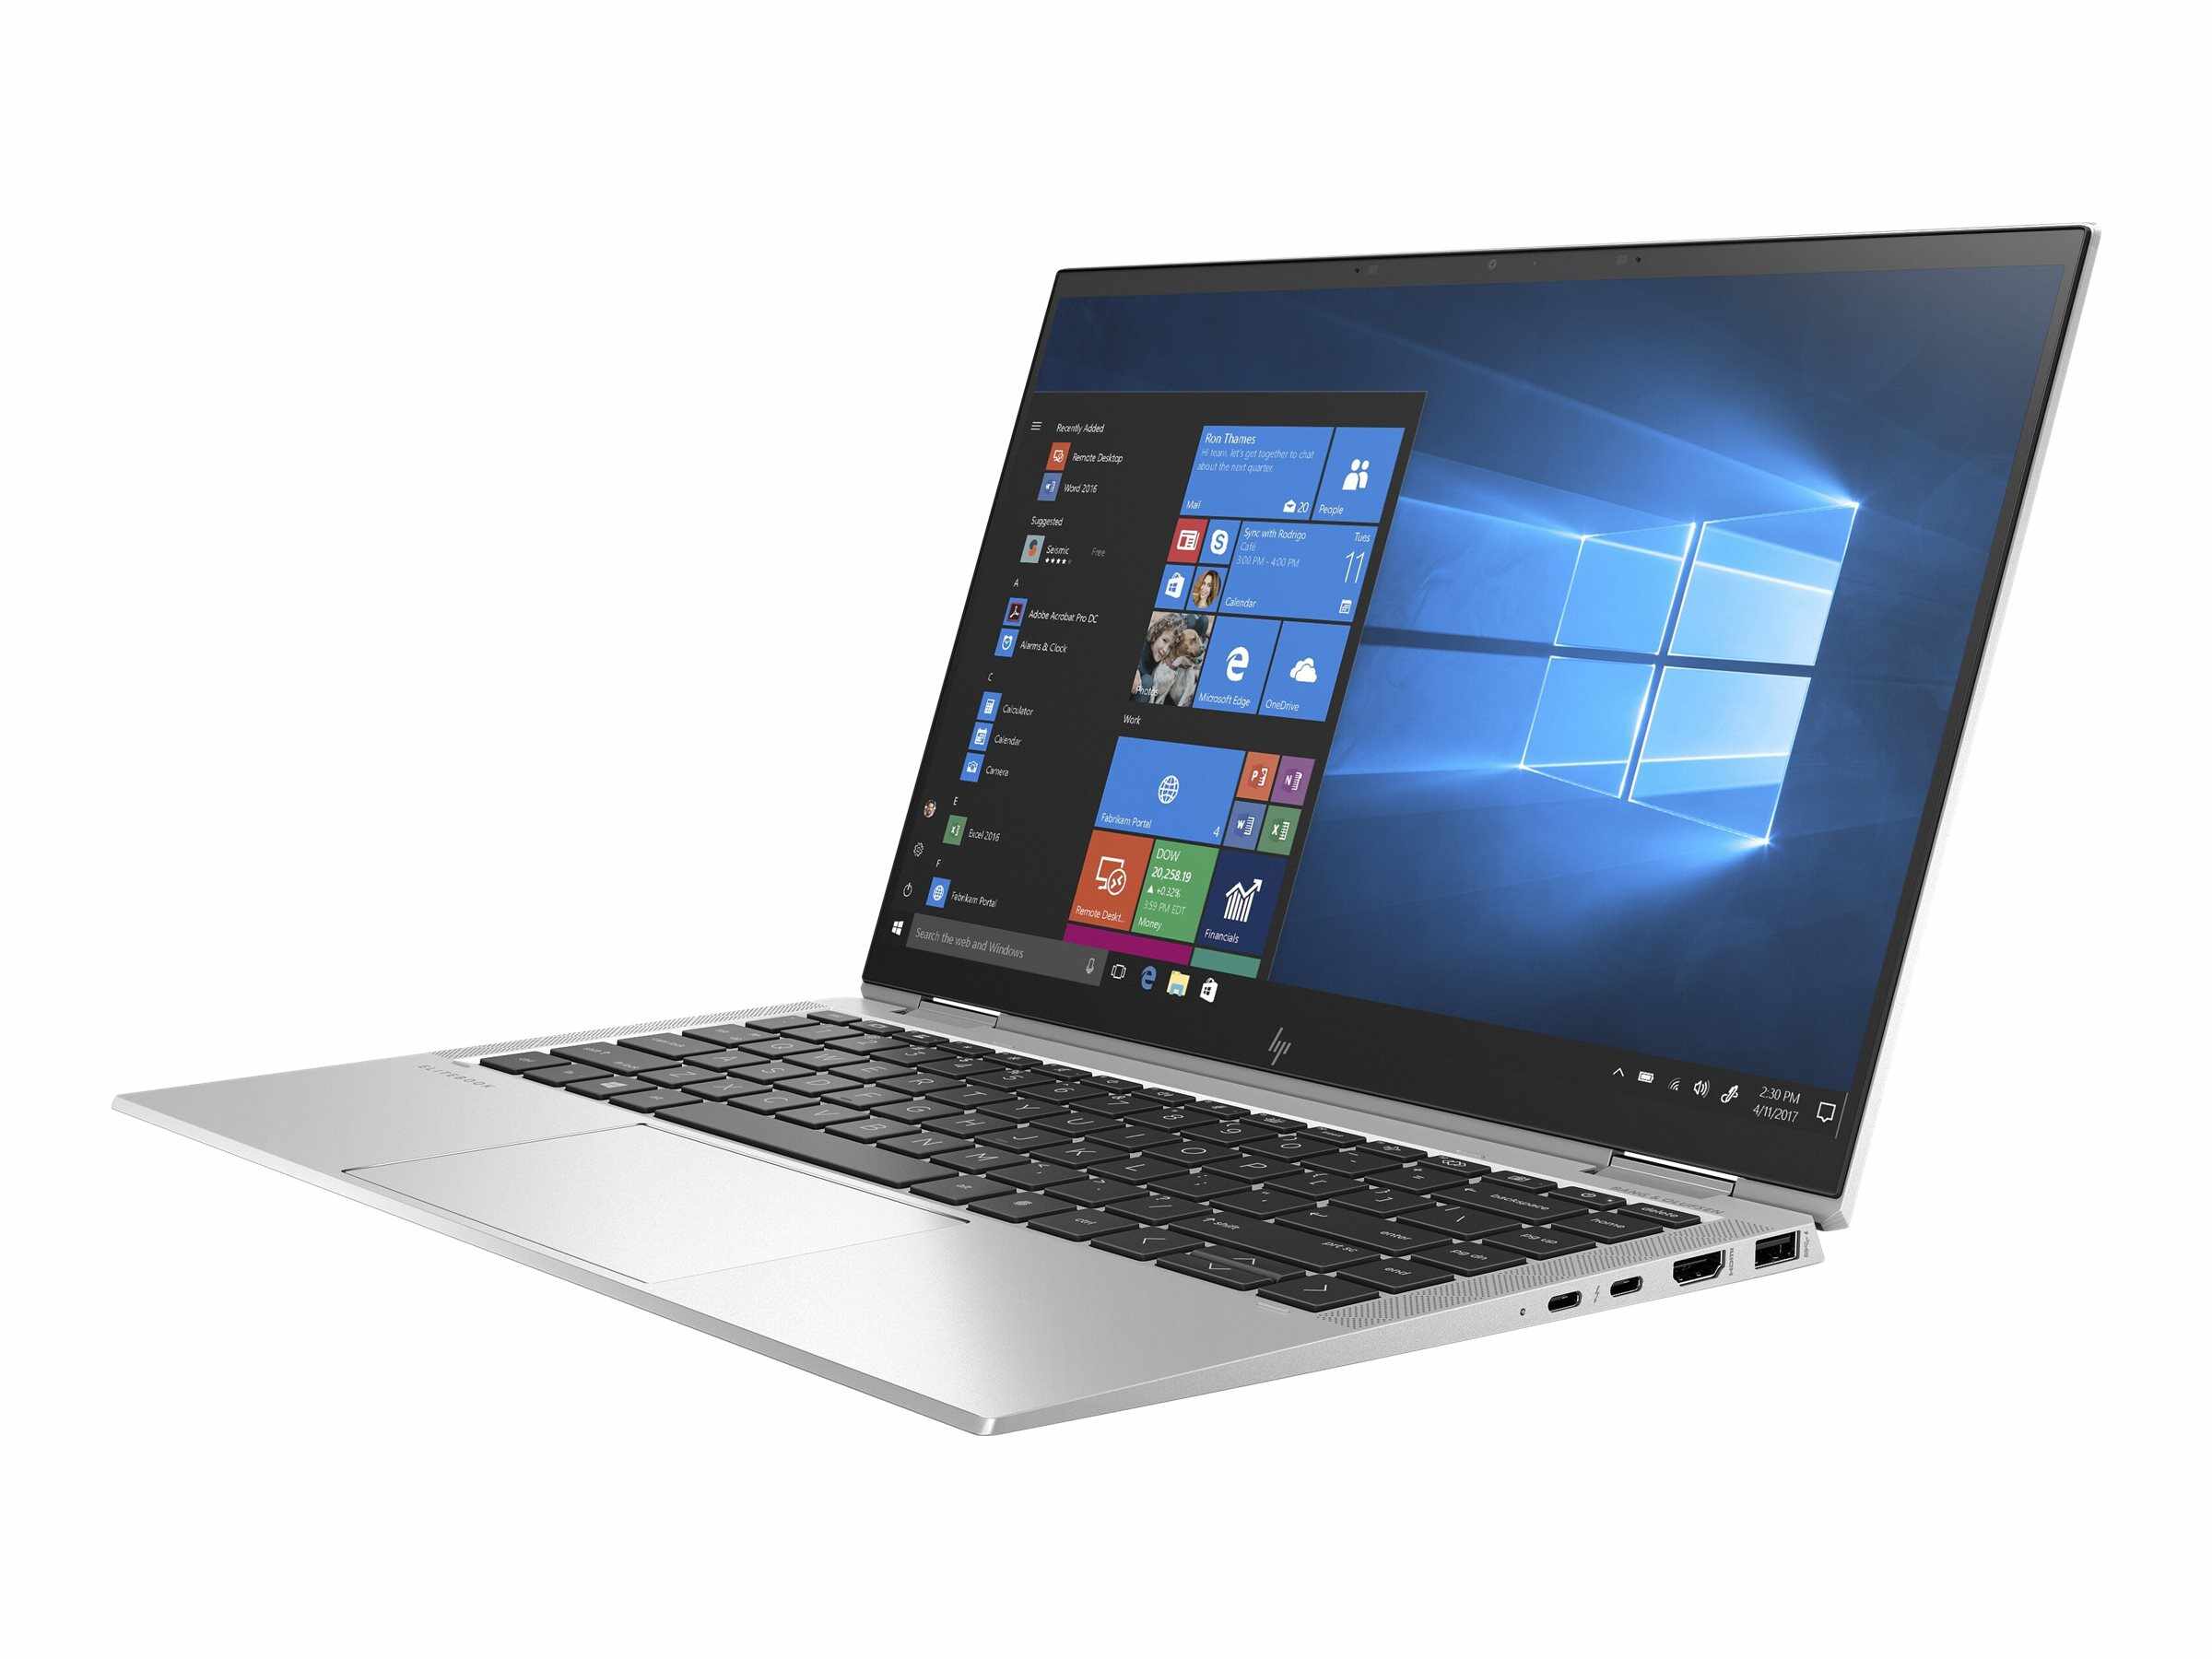 Laptop Second Hand HP EliteBook X360 1040 G7, Intel Core i7-10610U 1.10 - 4.90GHz, 16GB DDR4, 256GB SSD, 14 Inch Full HD Touchscreen, Webcam, Grad A-